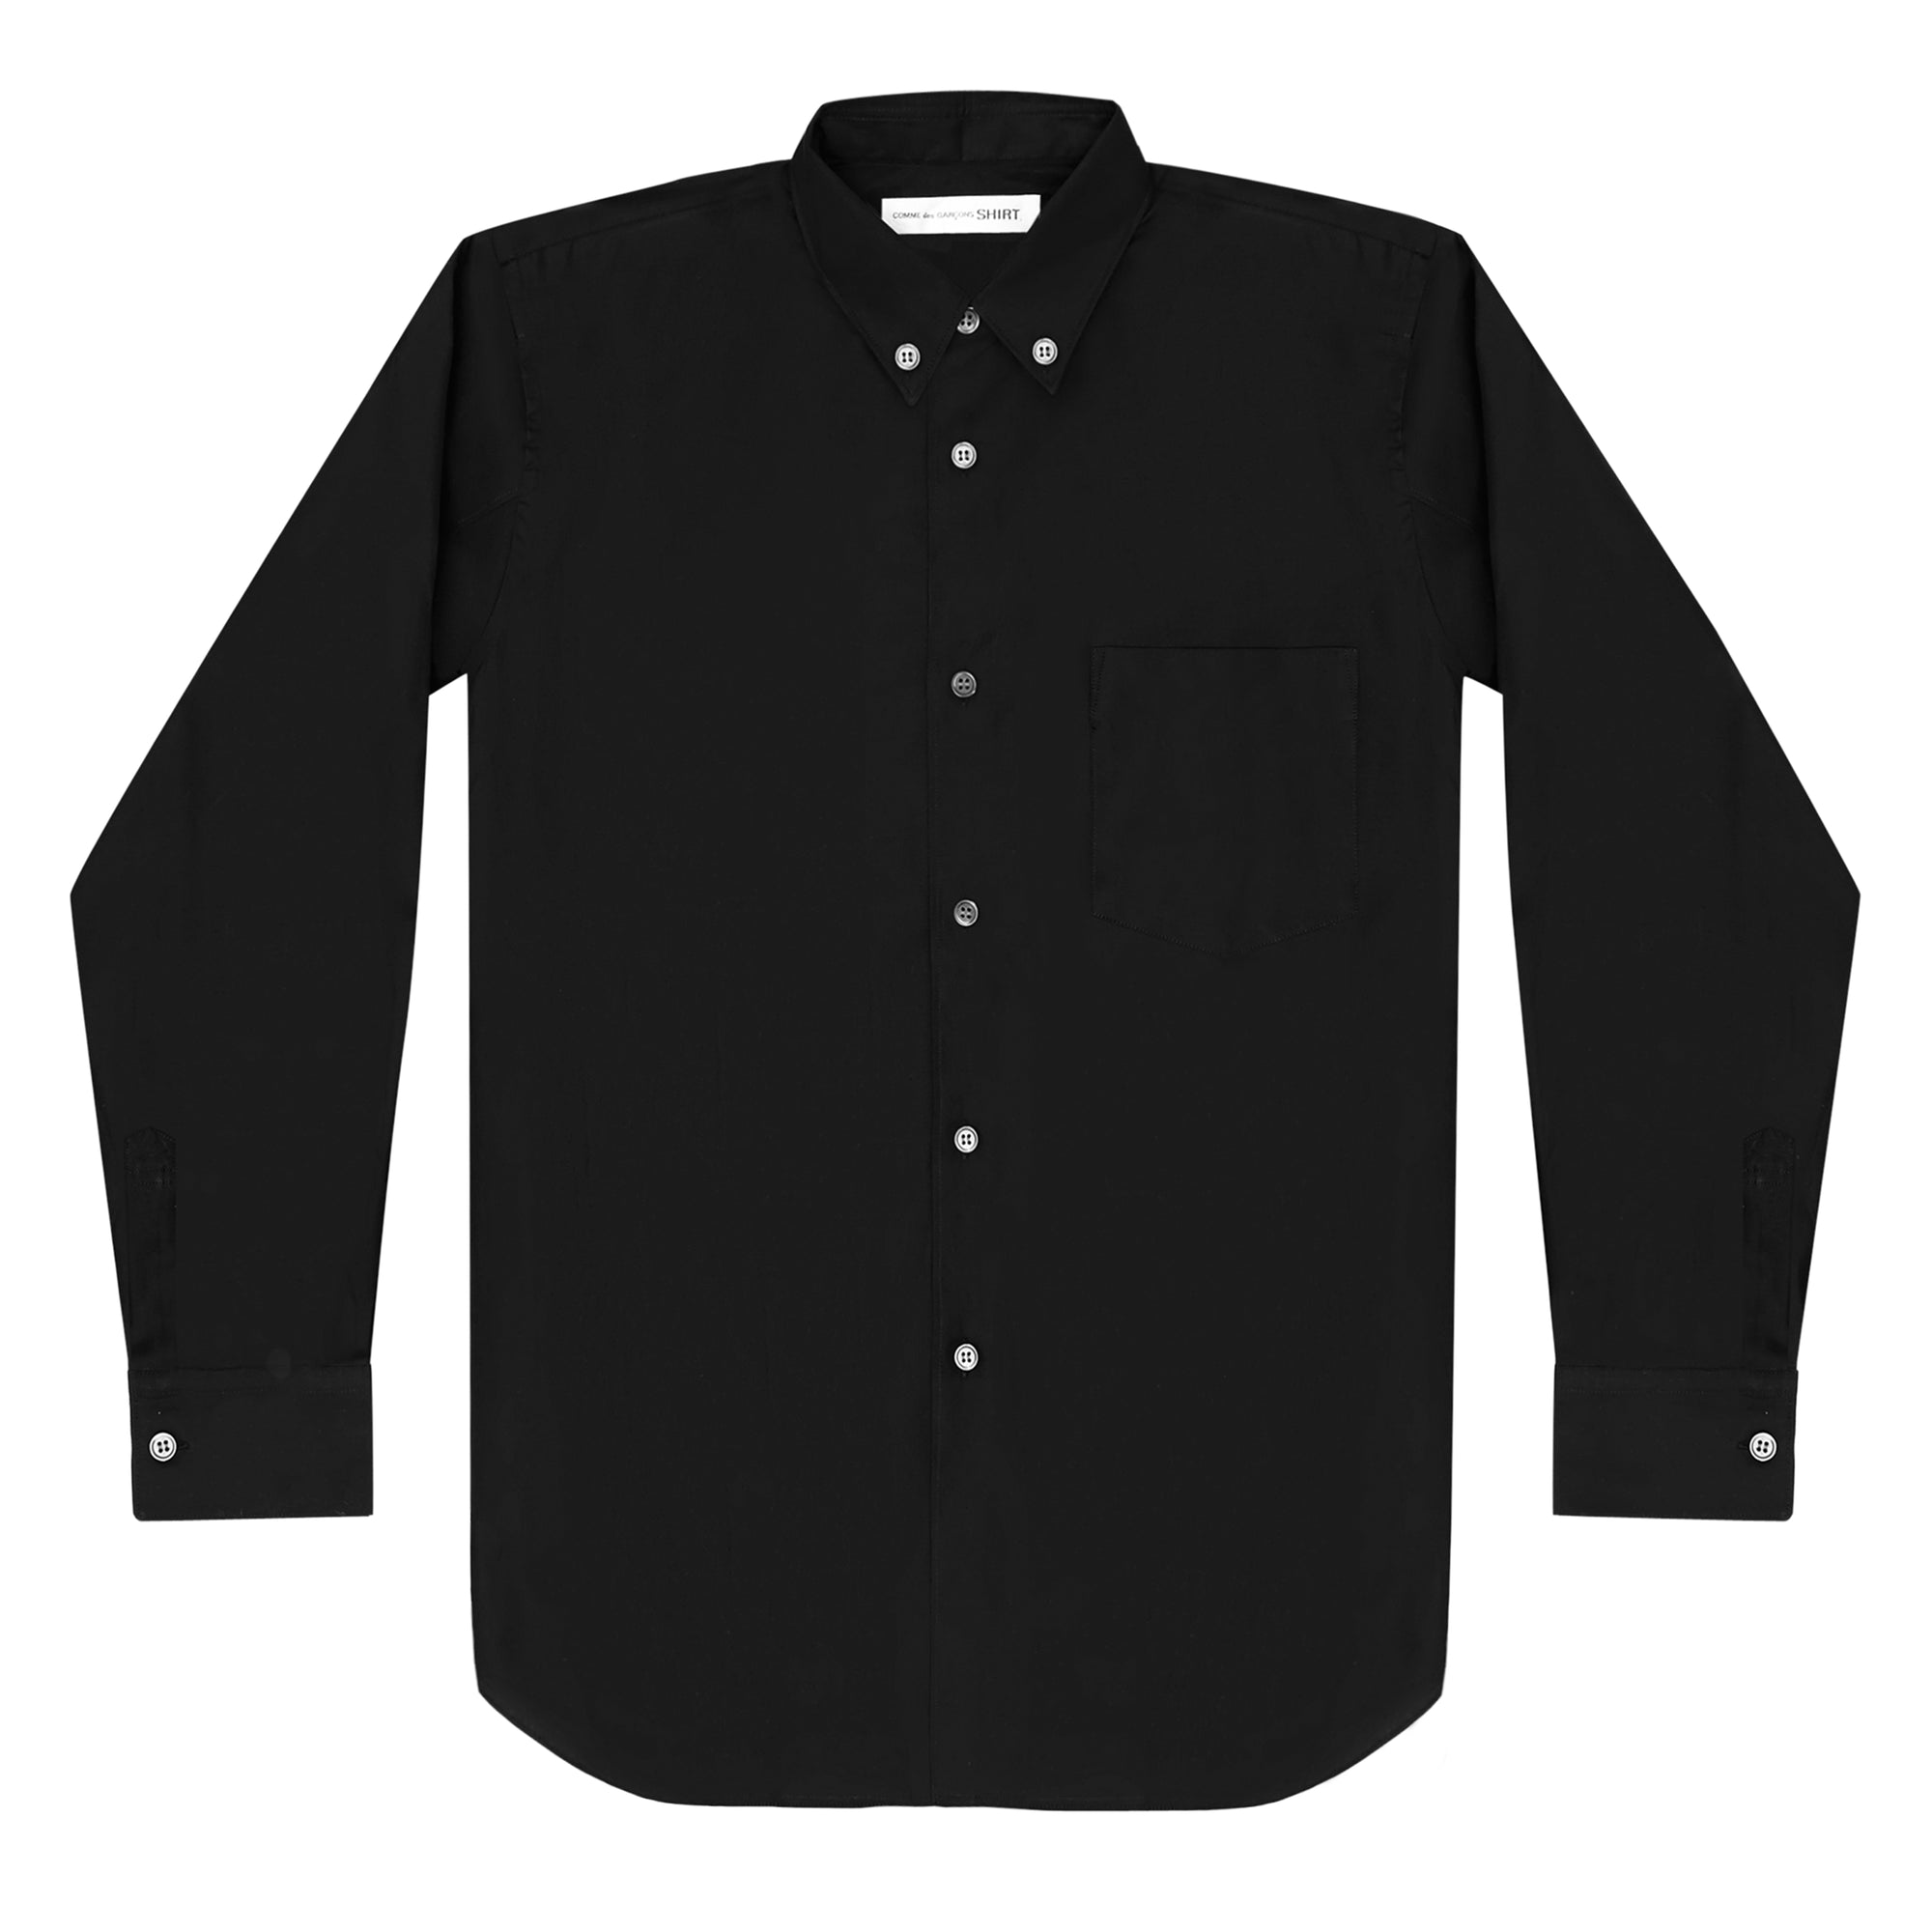 CDG SHIRT FOREVER - Slim Fit Button-Down Cotton Shirt CDGS6PLA - (Black) view 1